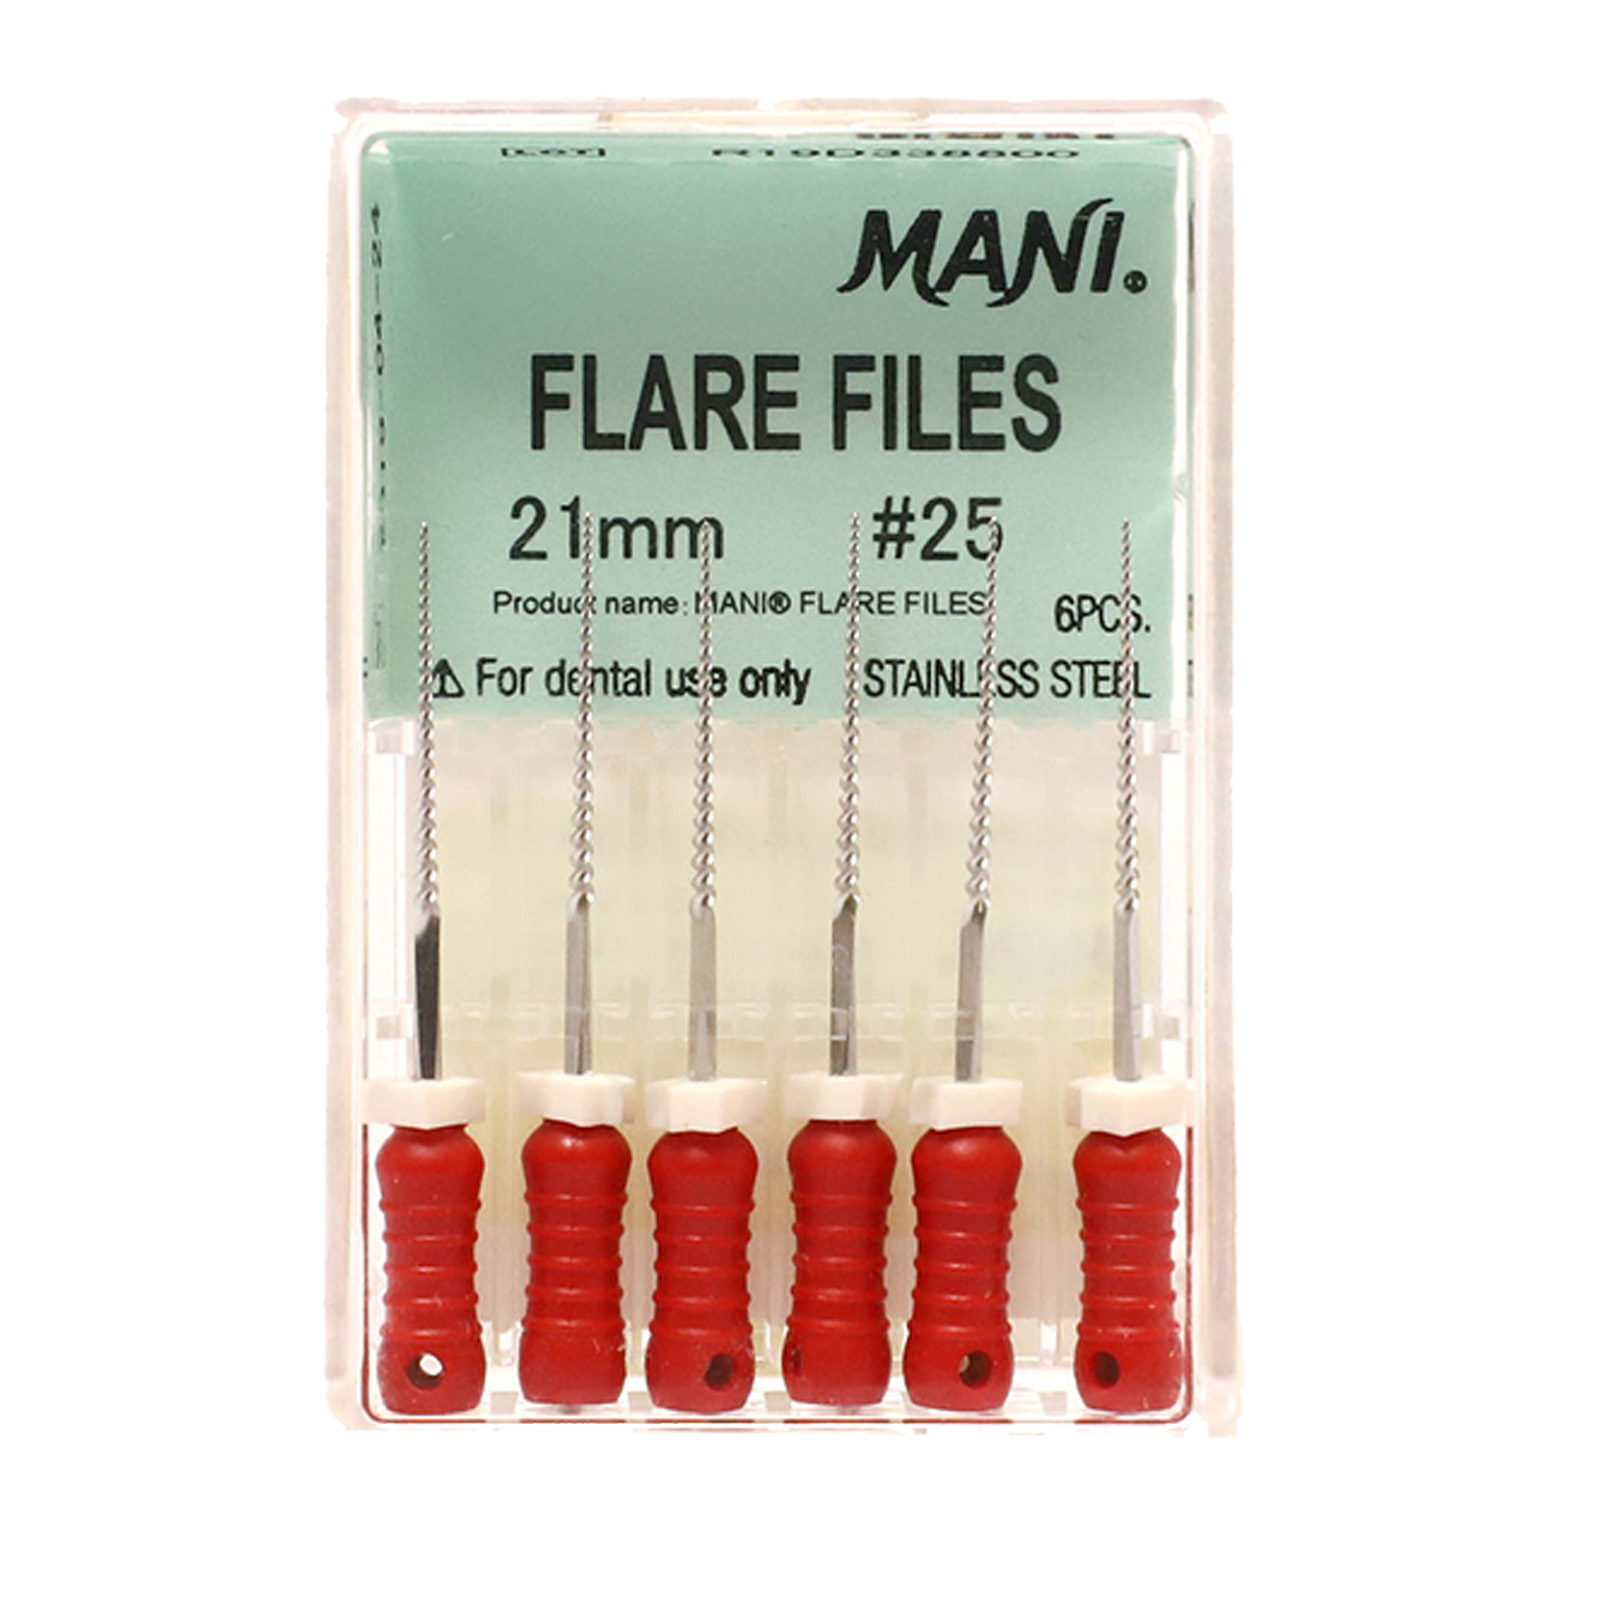 Mani Flare Files #25 21mm